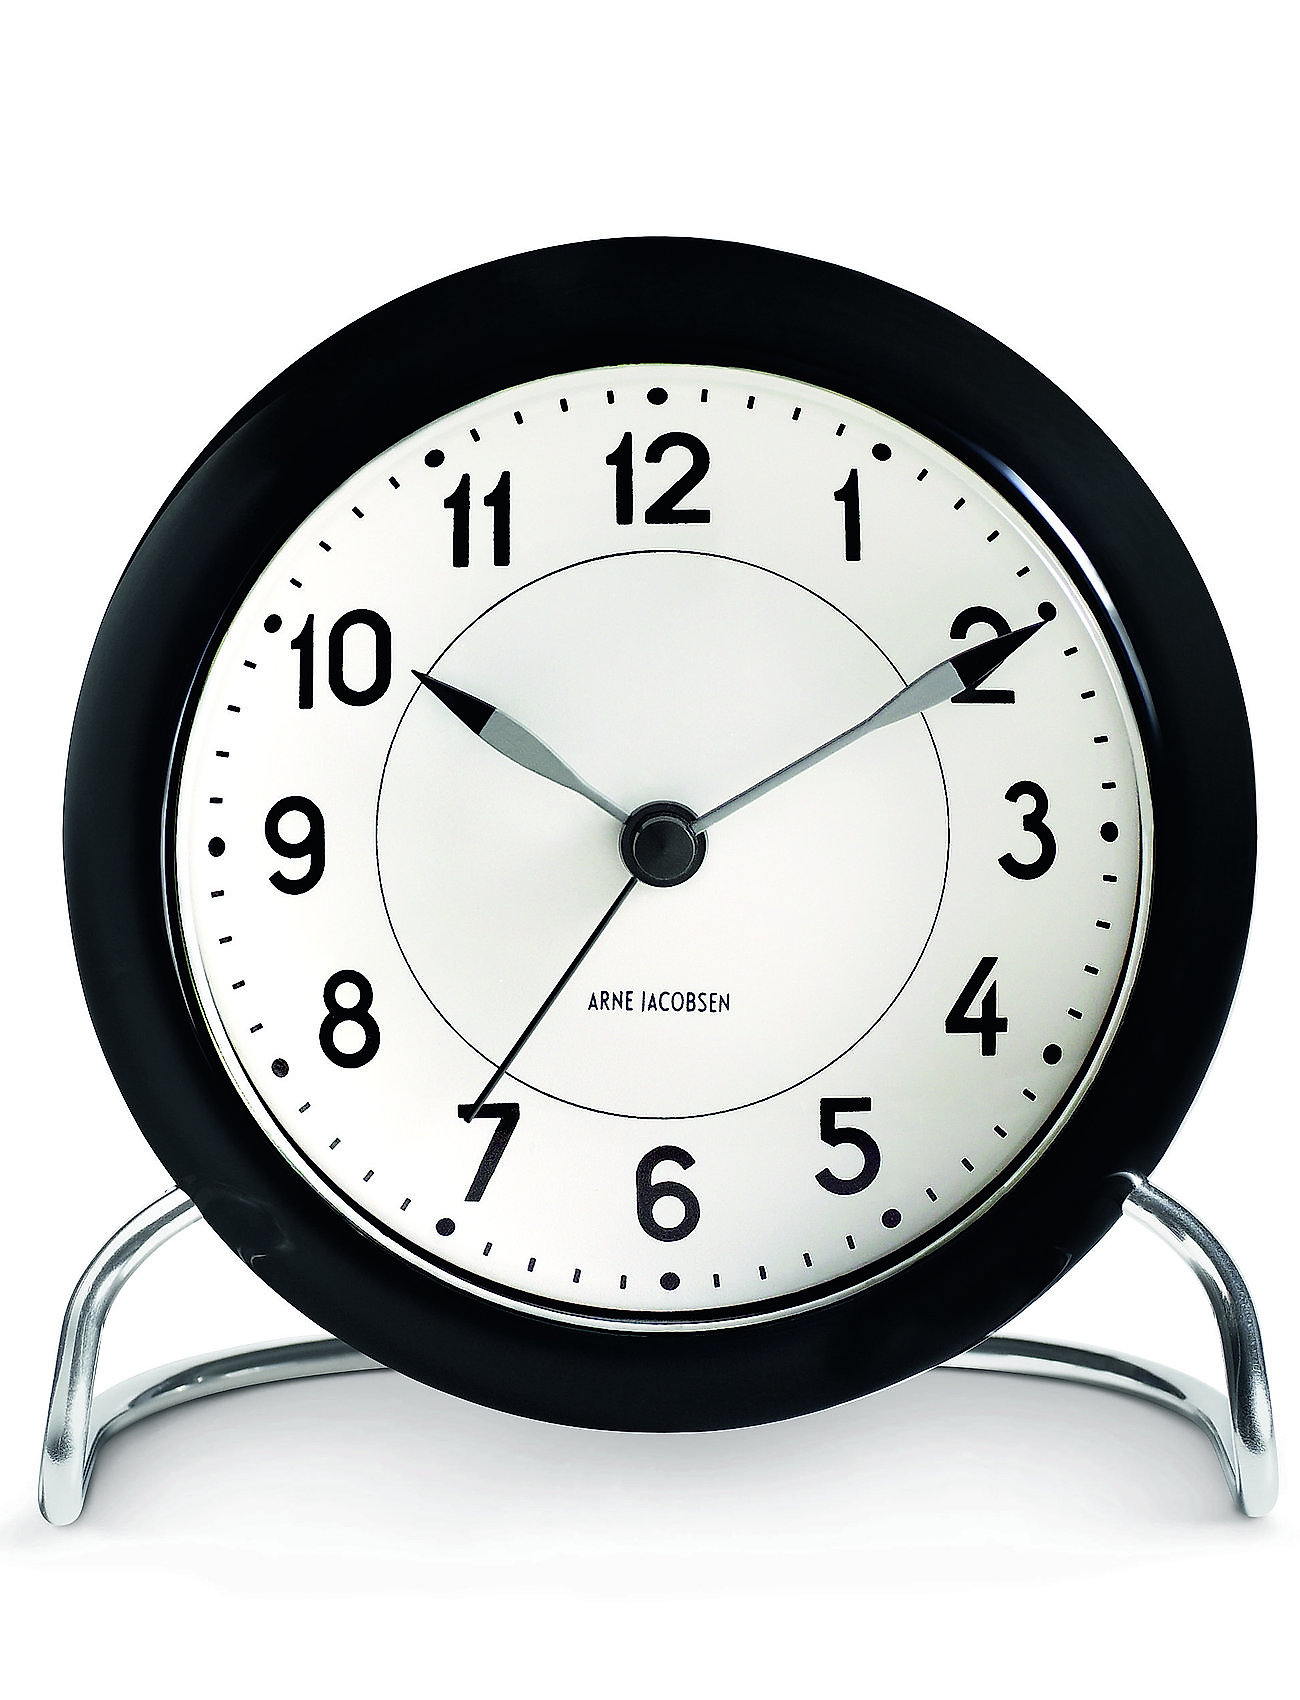 Station Bordur Ø11 Cm Home Decoration Watches Alarm Clocks Black Arne Jacobsen Clocks